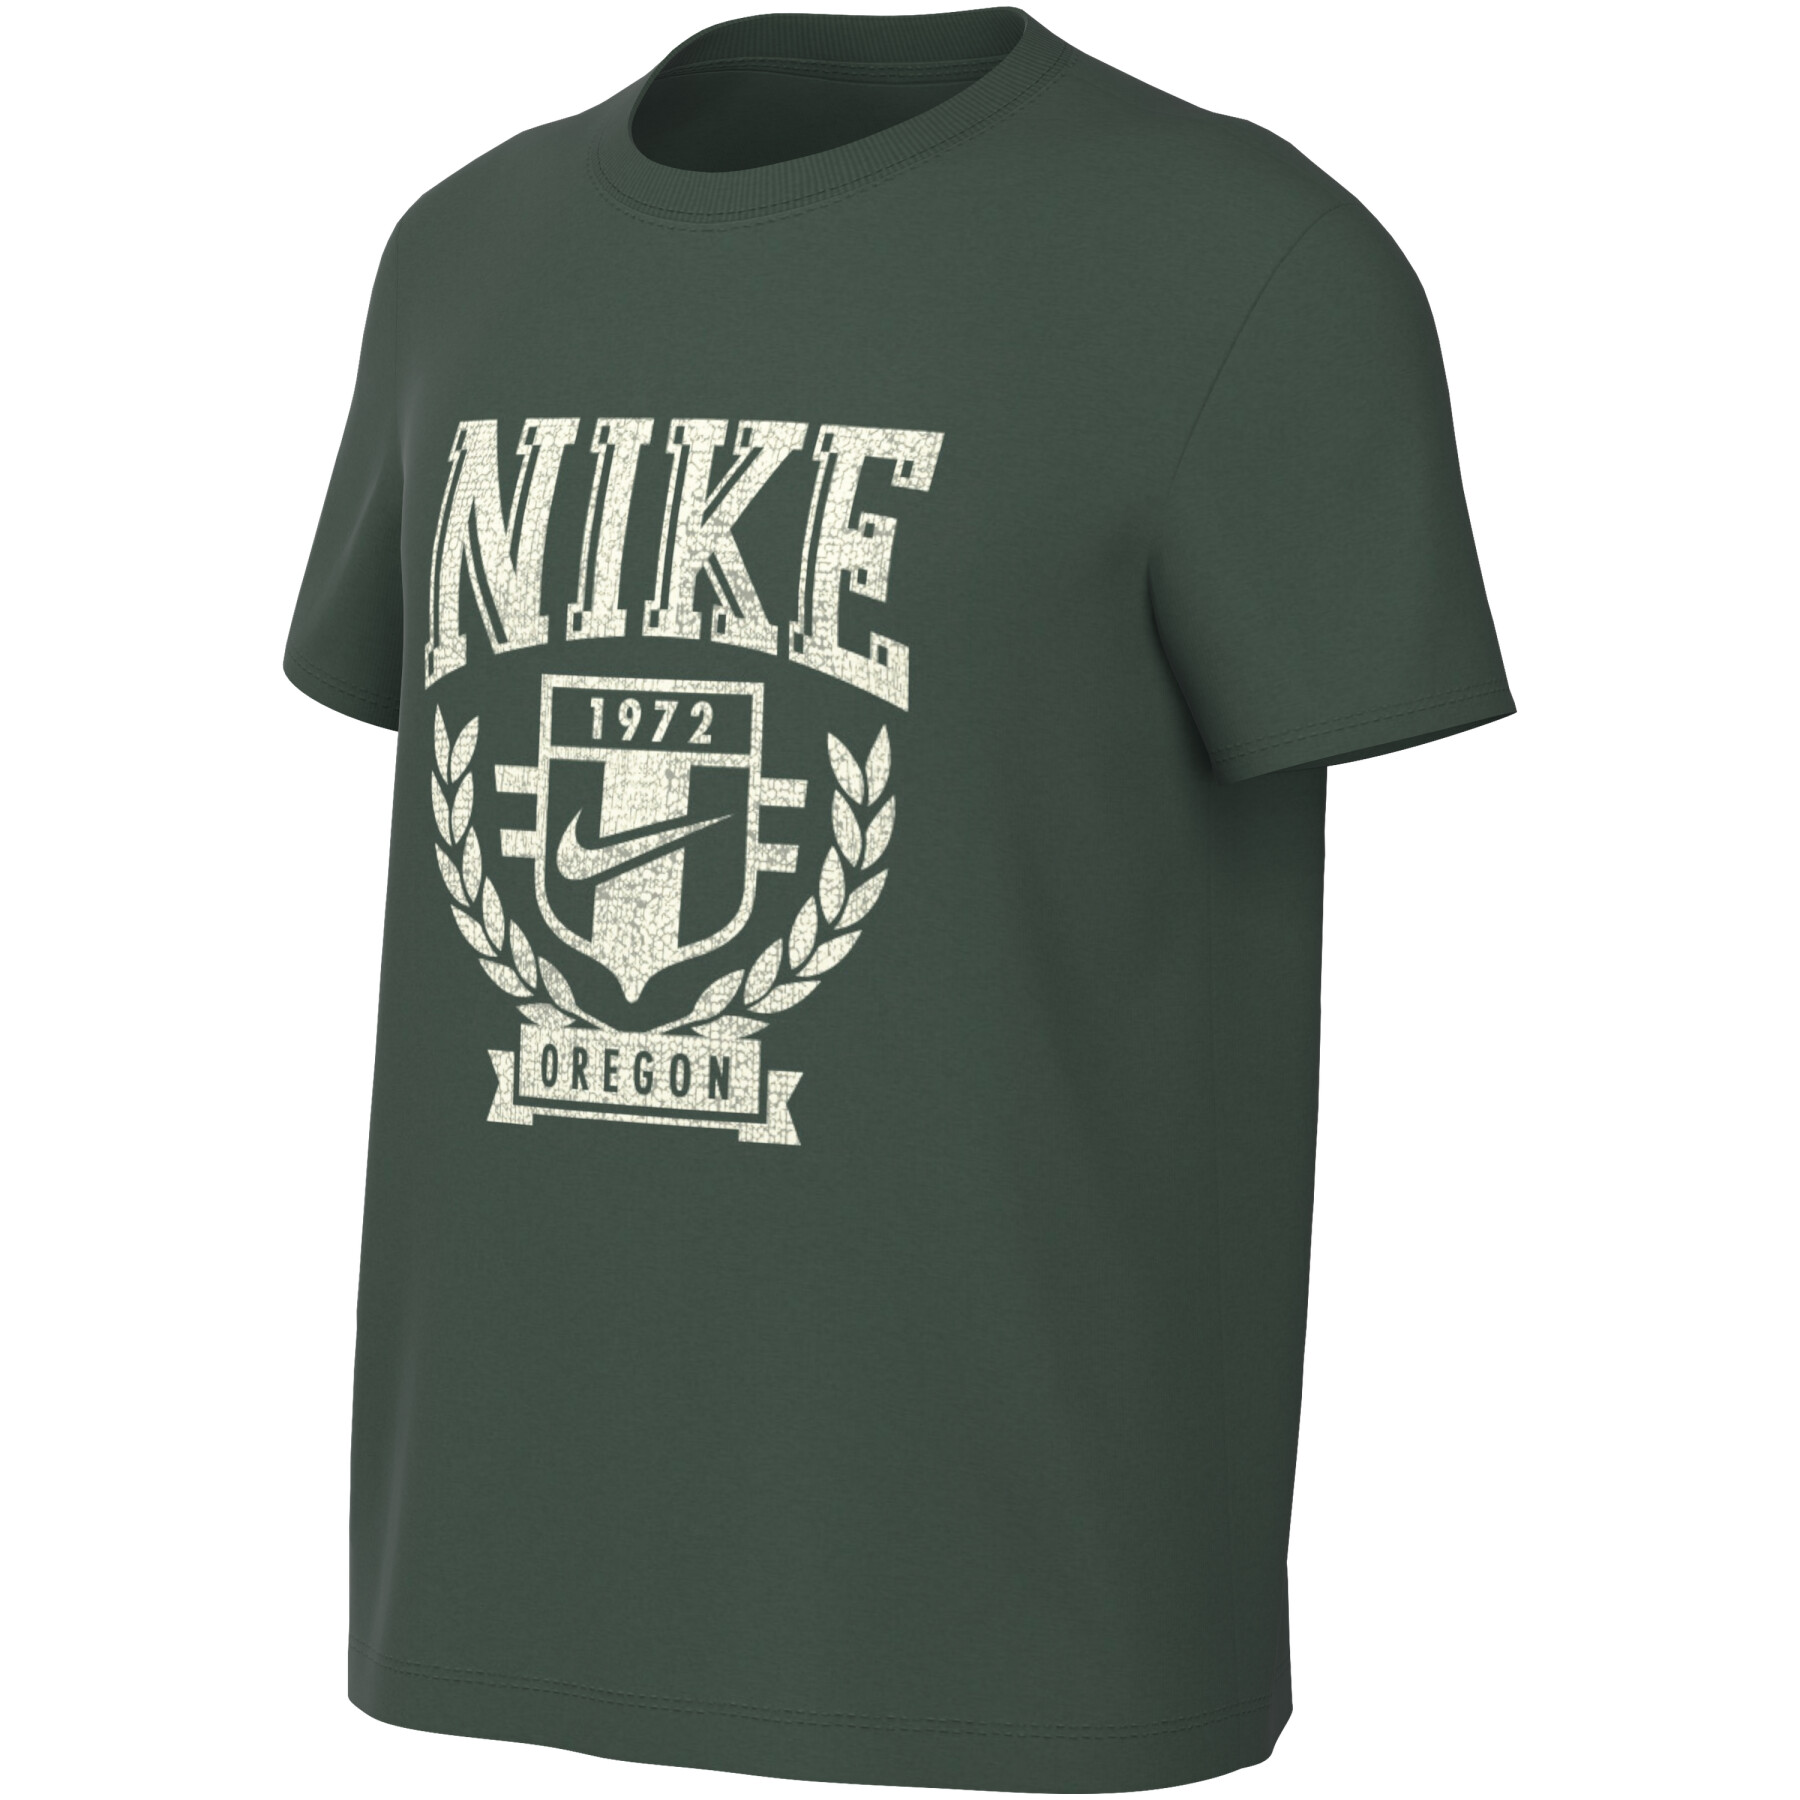 T-shirt fille Nike